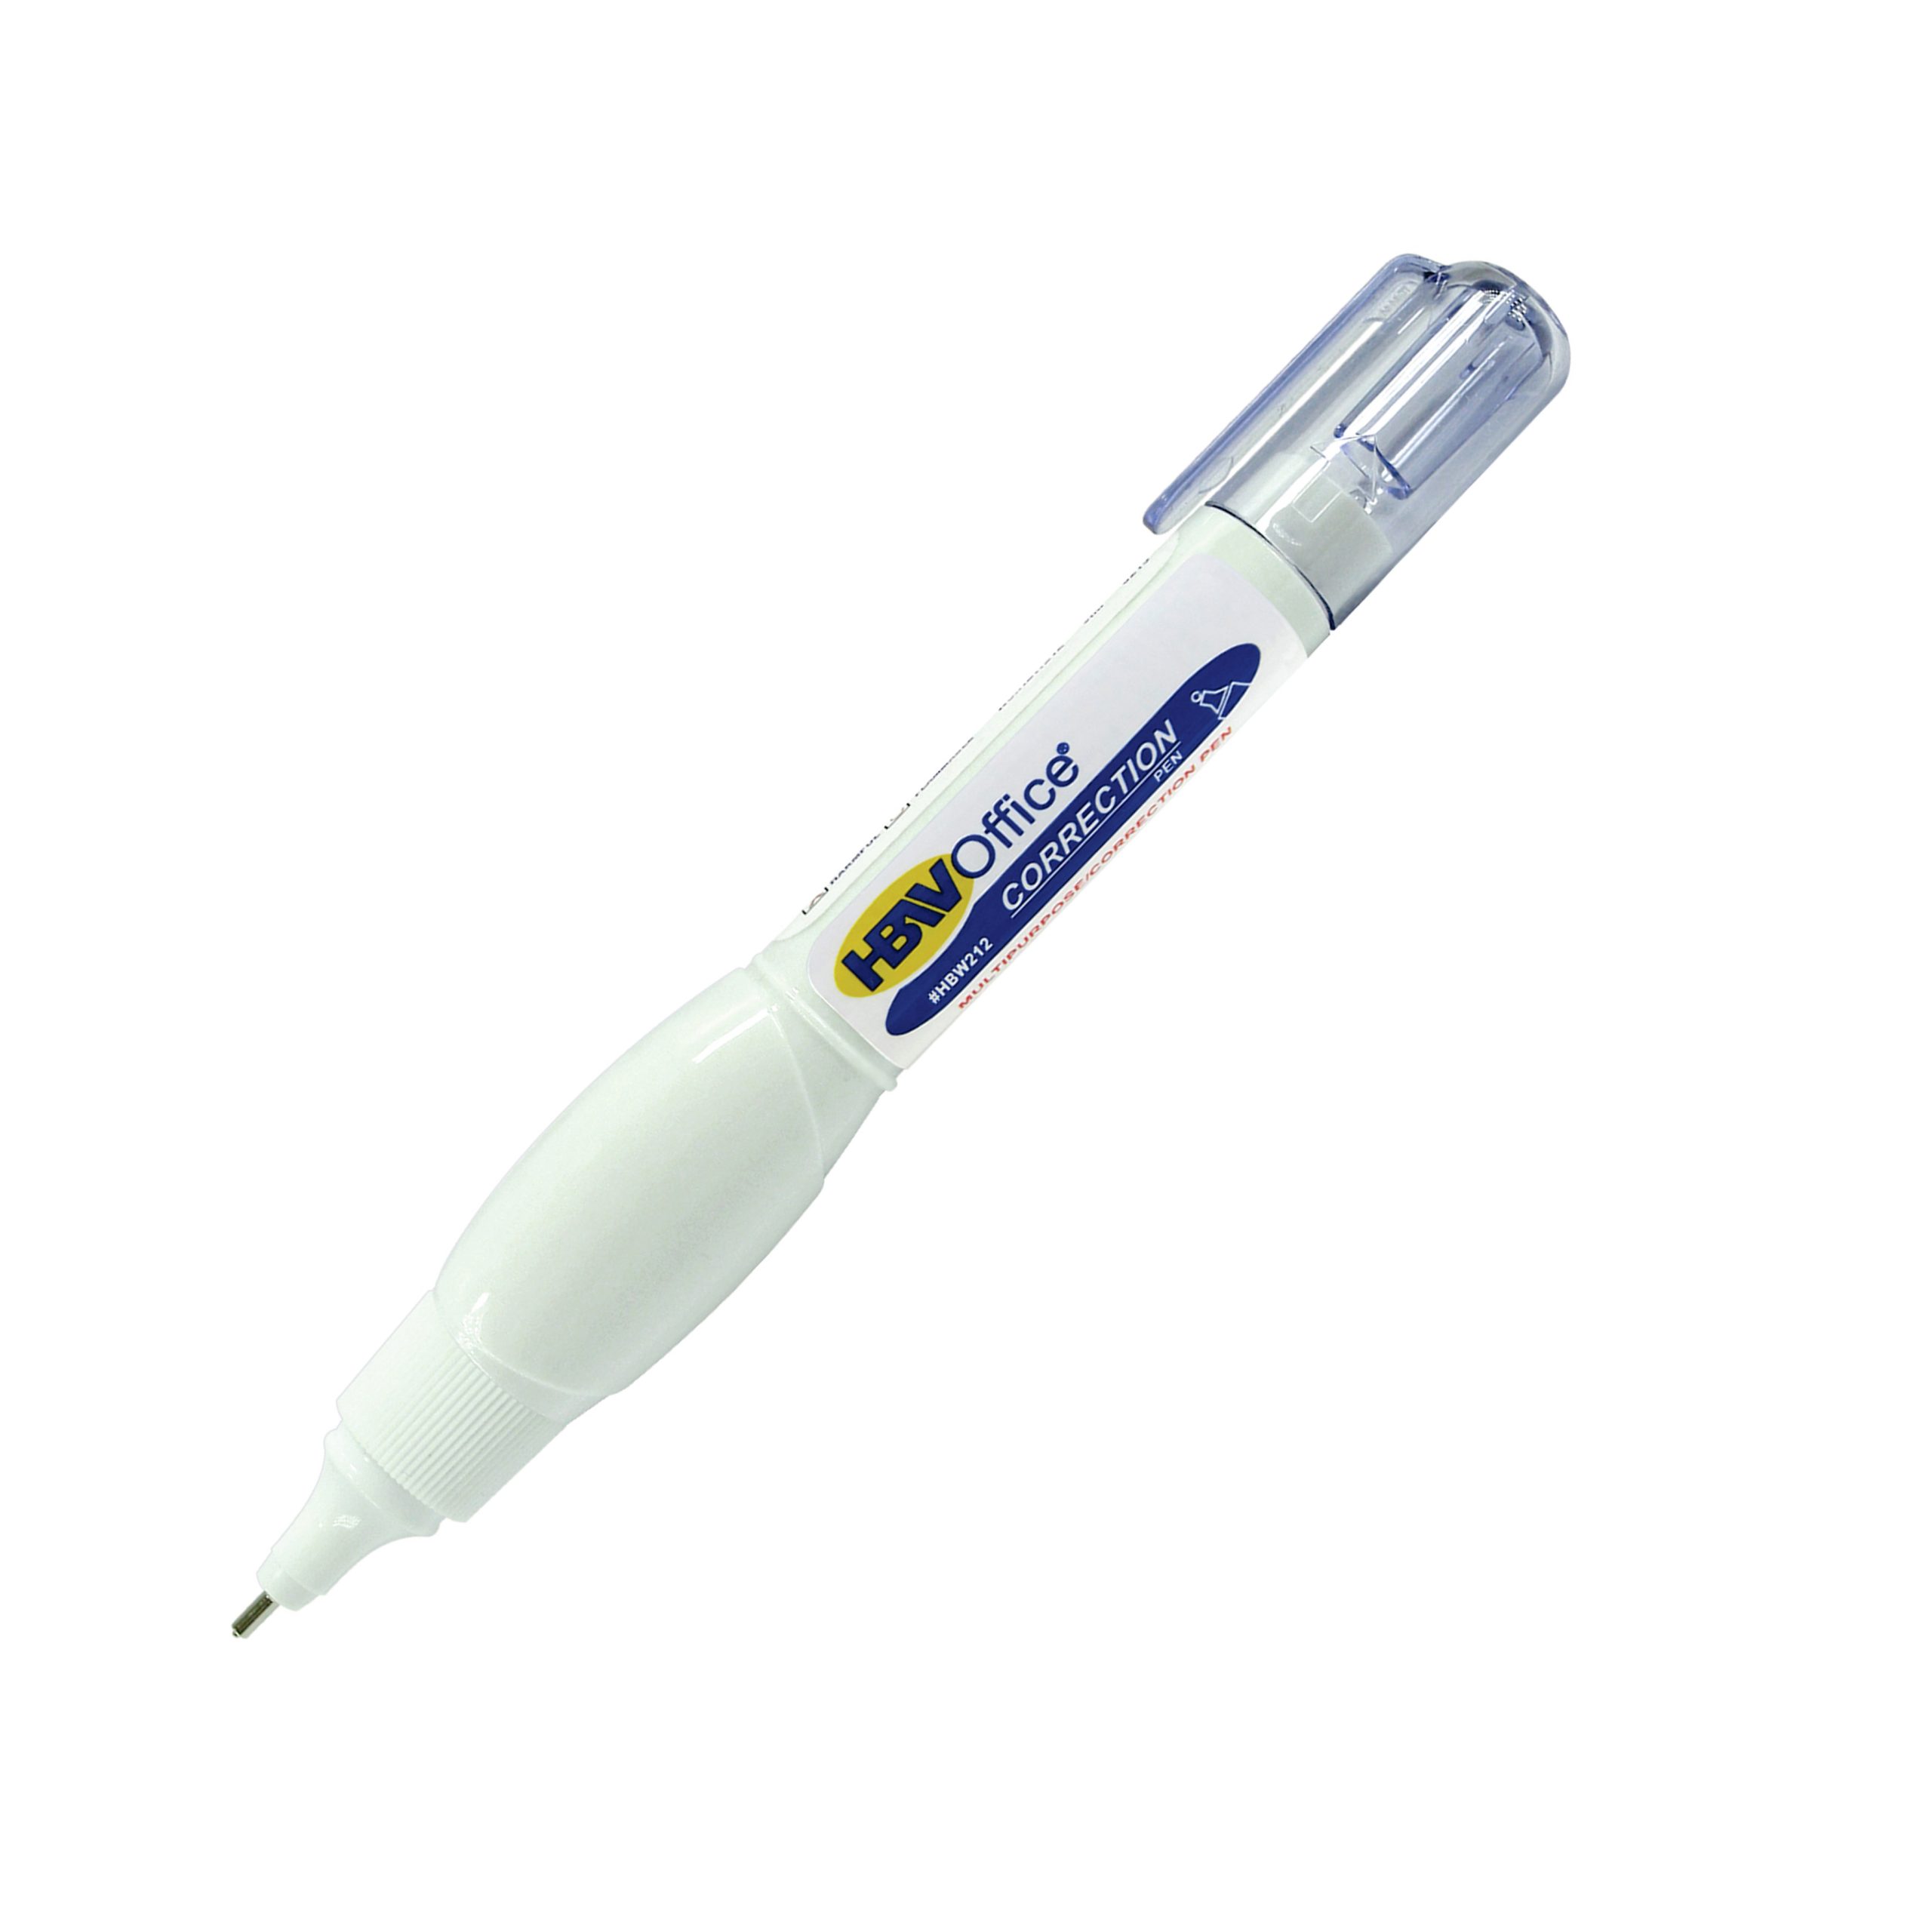 HBW Correction Pen Type 9ml - 212